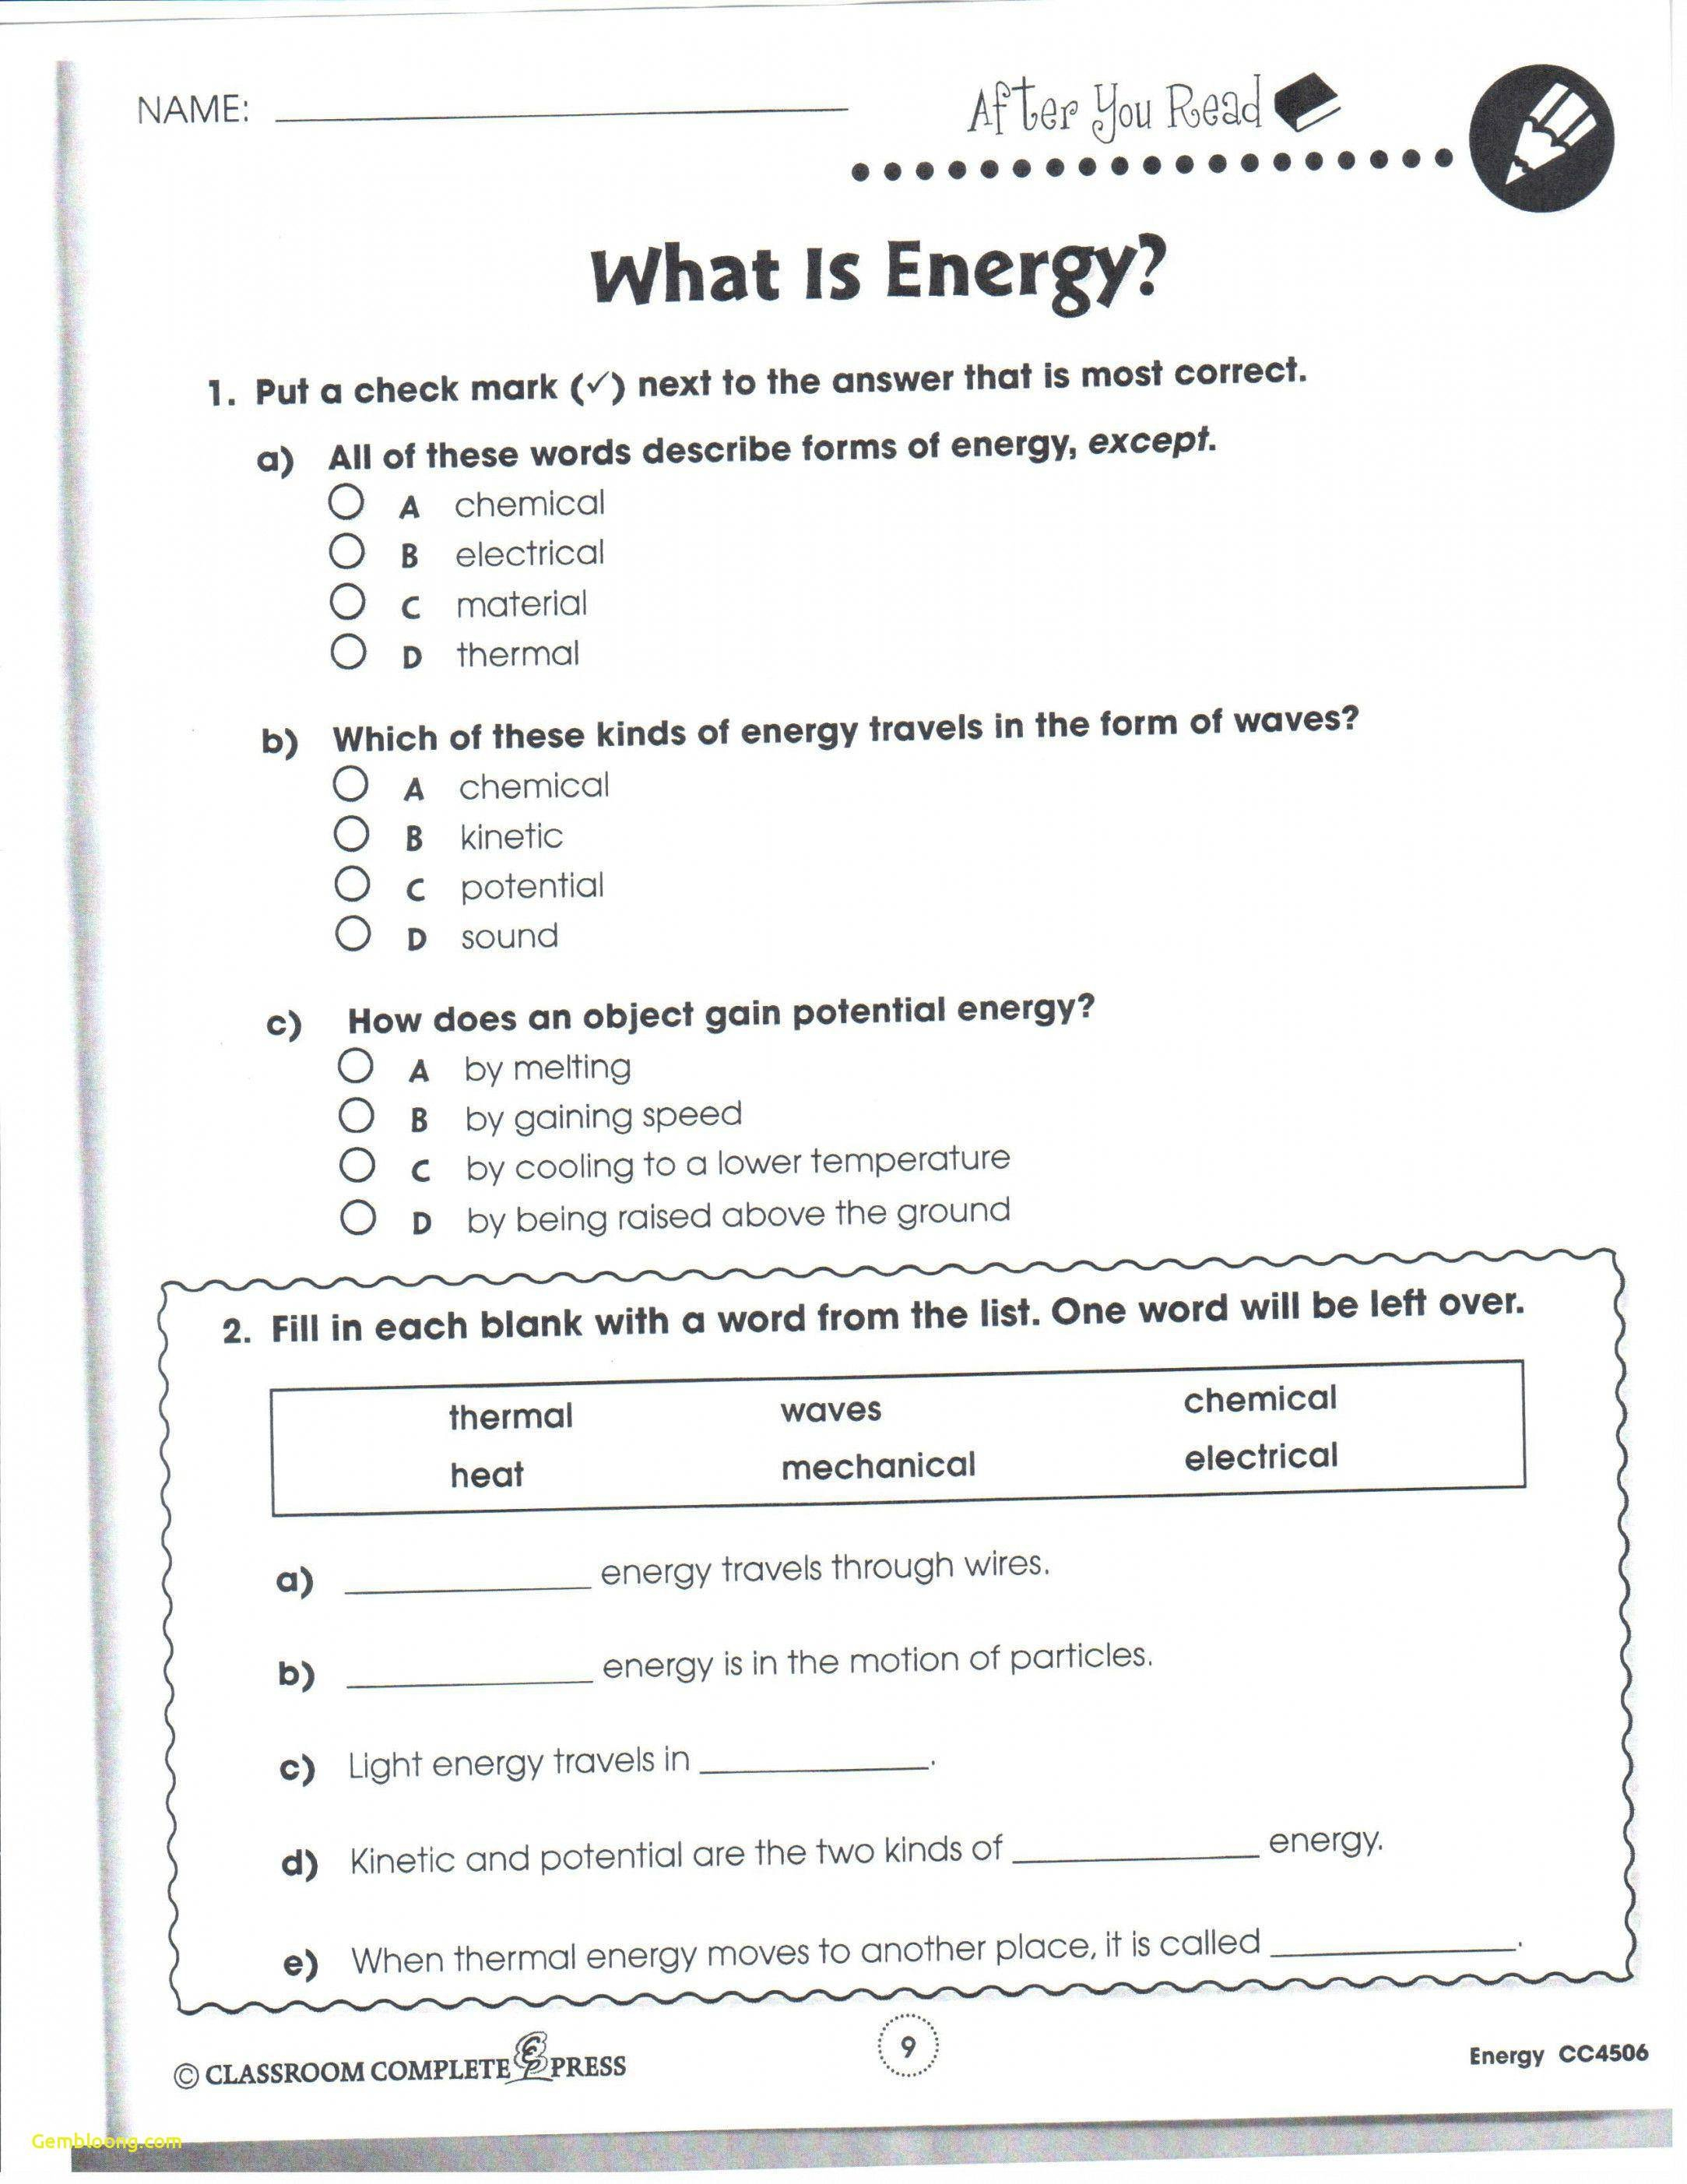 Bill Nye Waves Worksheet  Cramerforcongress Intended For Bill Nye The Science Guy Energy Worksheet Answers